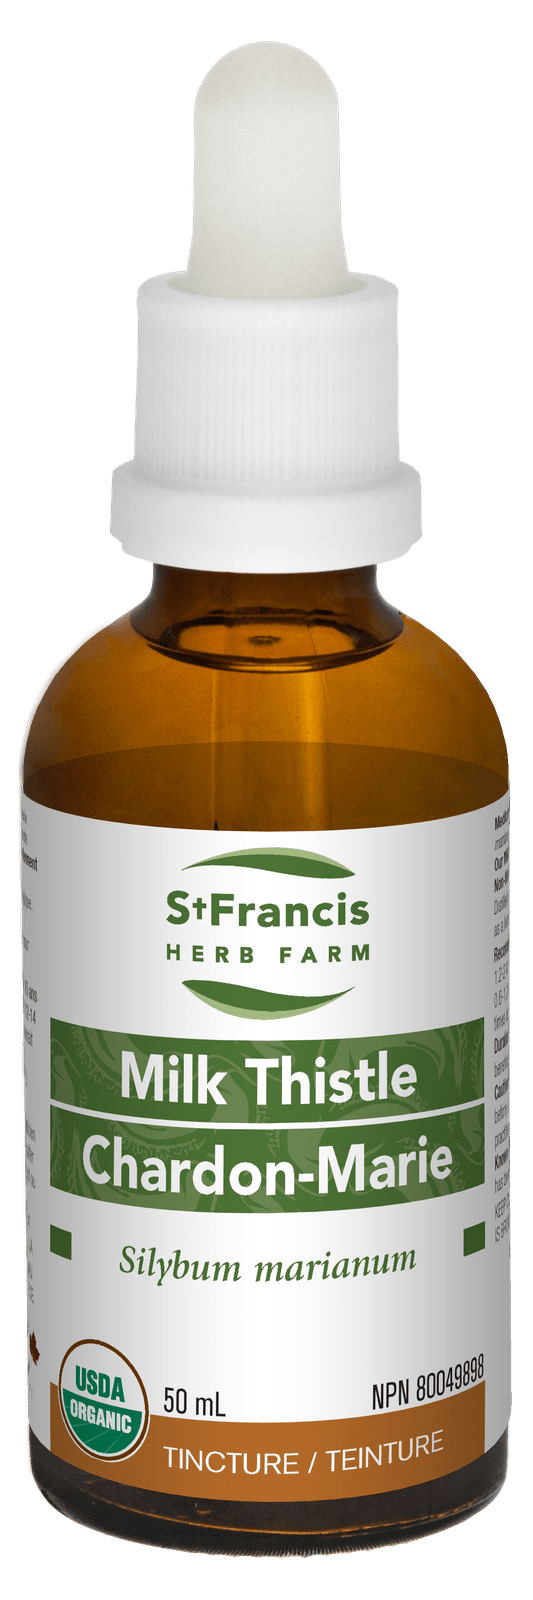 St Francis Herb Farm Milk Thistle Tincture Image 2